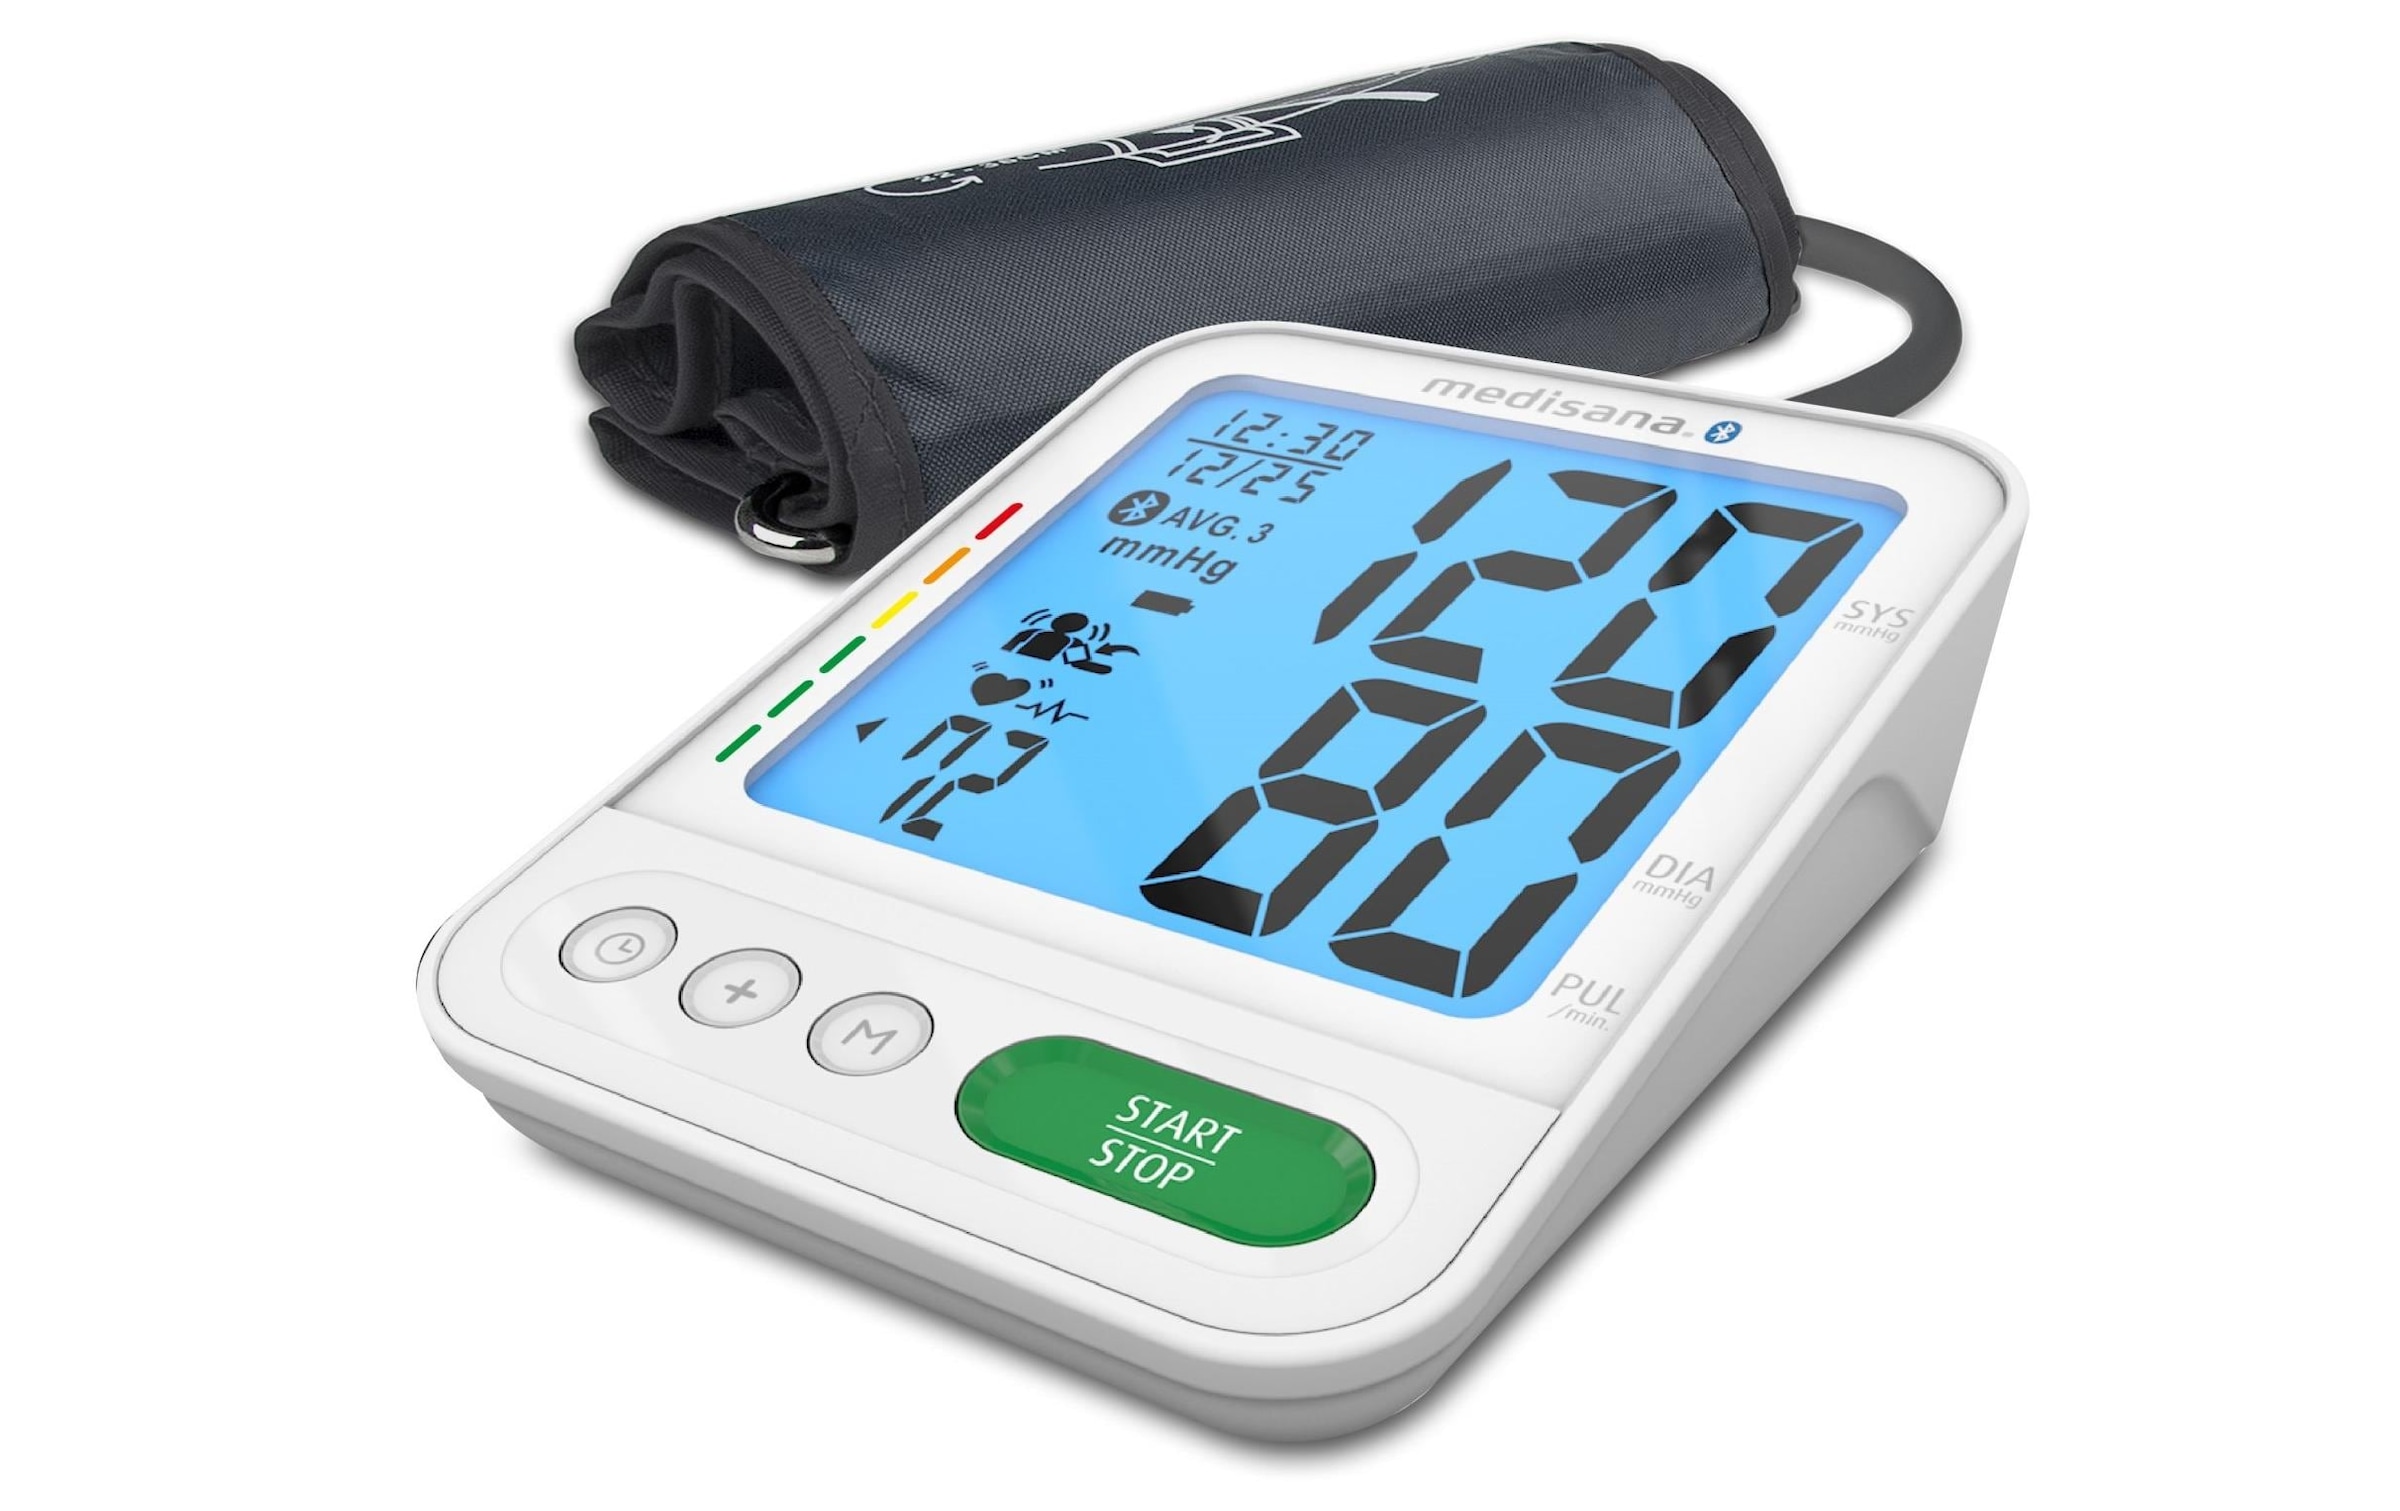 Medisana Blutdruckmessgerät »BU584 Con«